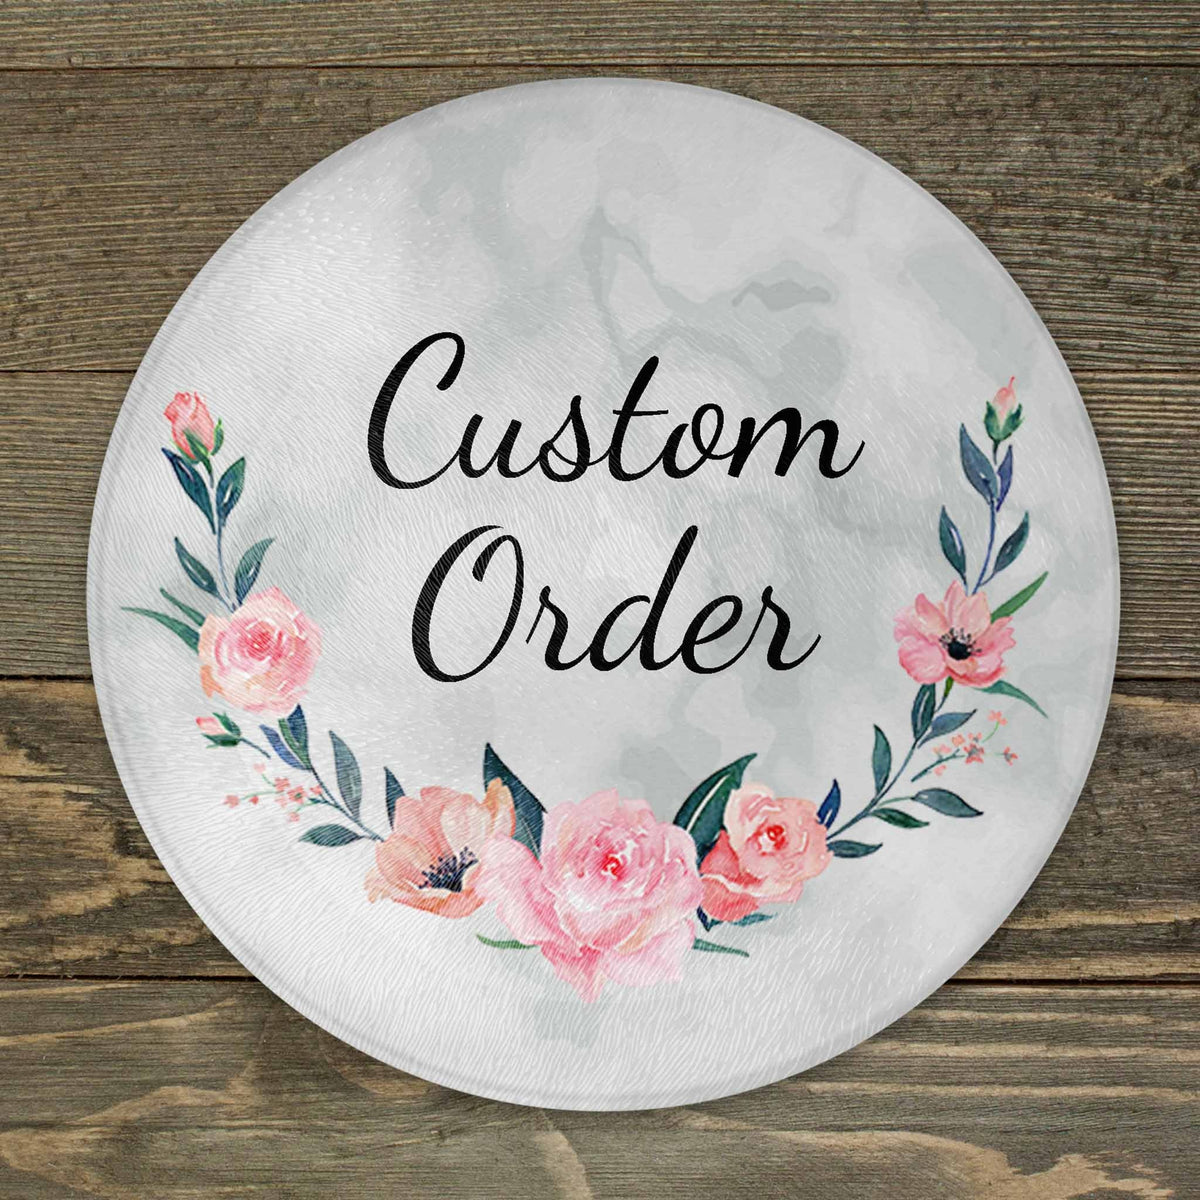 Personalized Cutting Board | Custom Glass Cutting Board | Custom Order